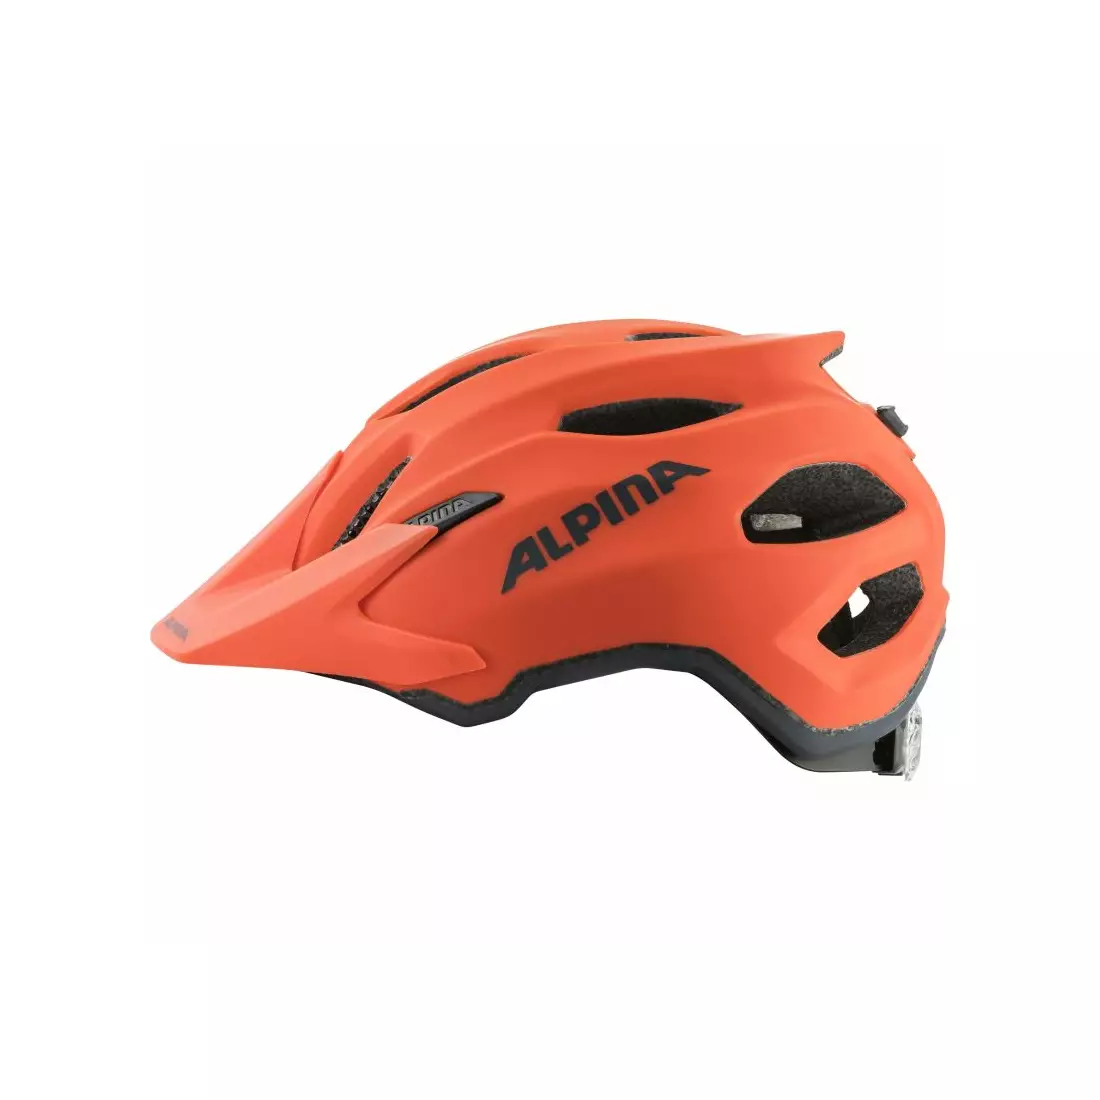 ALPINA kask rowerowy juniorski CARAPAX JR pumpkin-orange mat